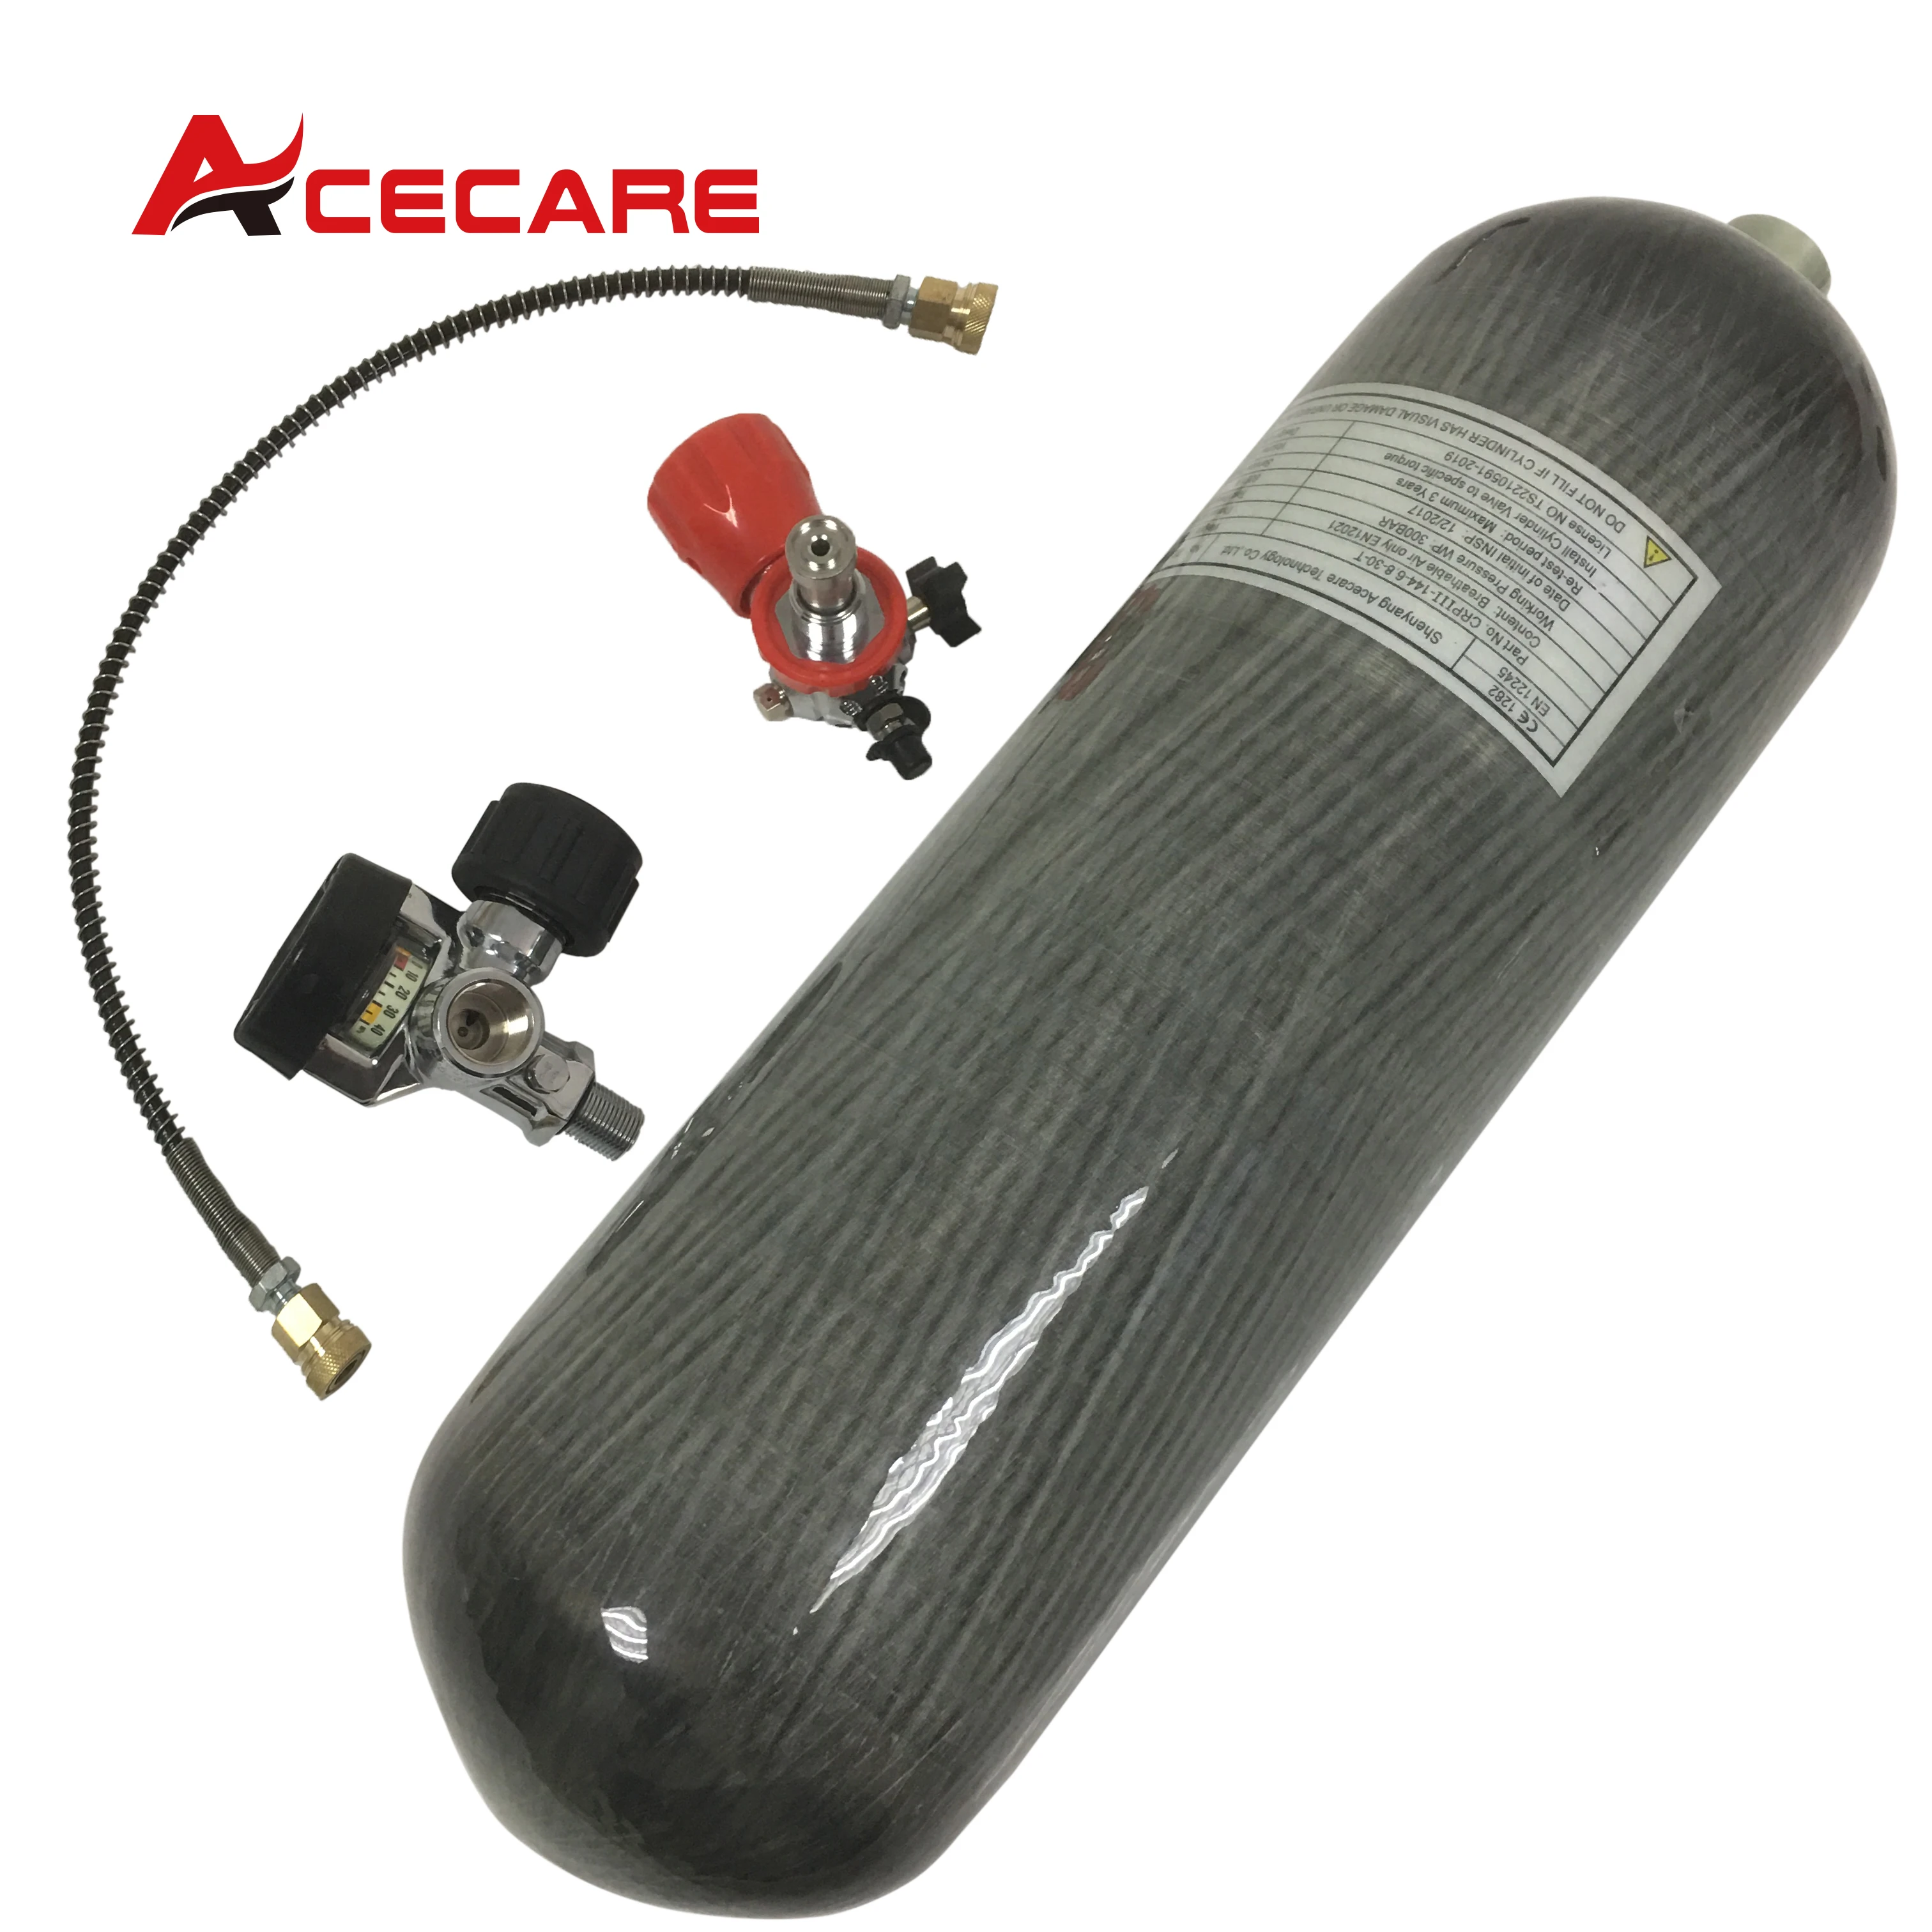 Acecare Carbon Fiber Hpa Air Tank 6.8L 4500psi Pressure Gauge Valve and Filling Station M18*1.5 SCBA Diving Fire Protection acecare 6 8l carbon fiber air tank 4500psi hpa valve